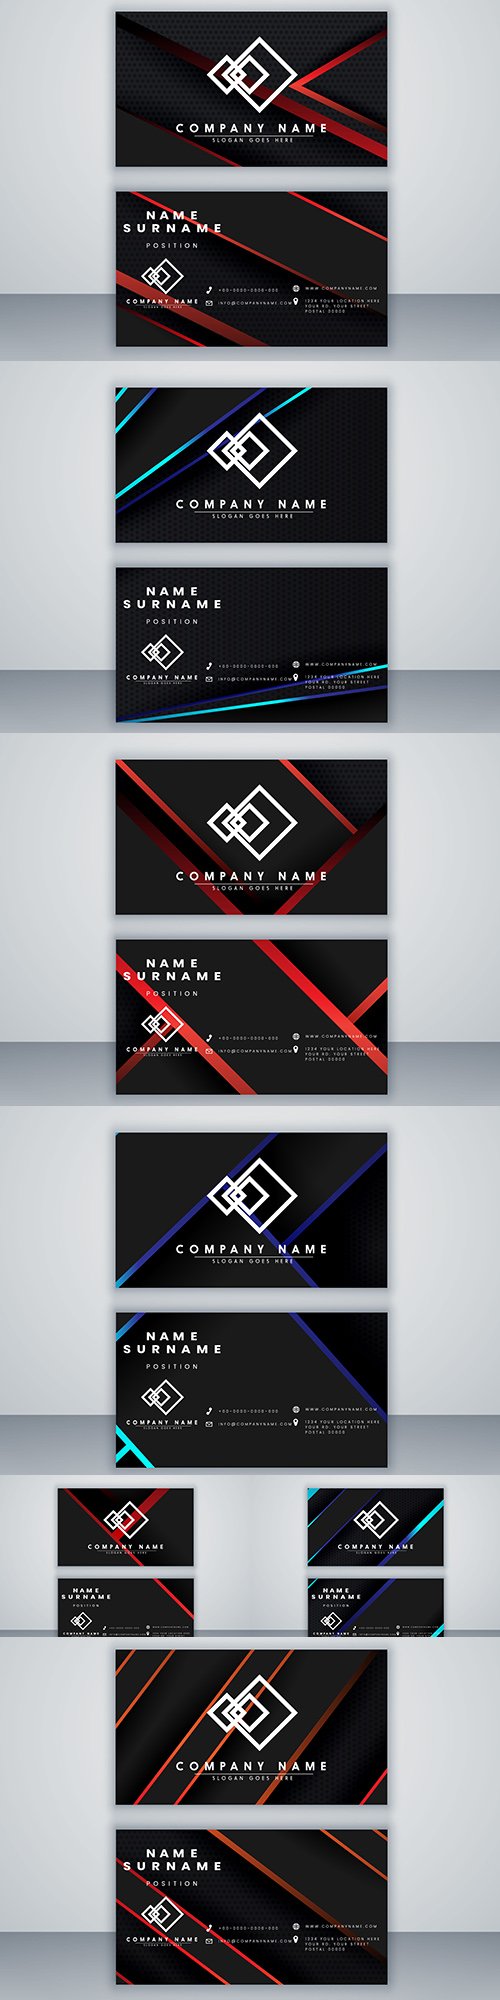 Modern design business card template in dark style